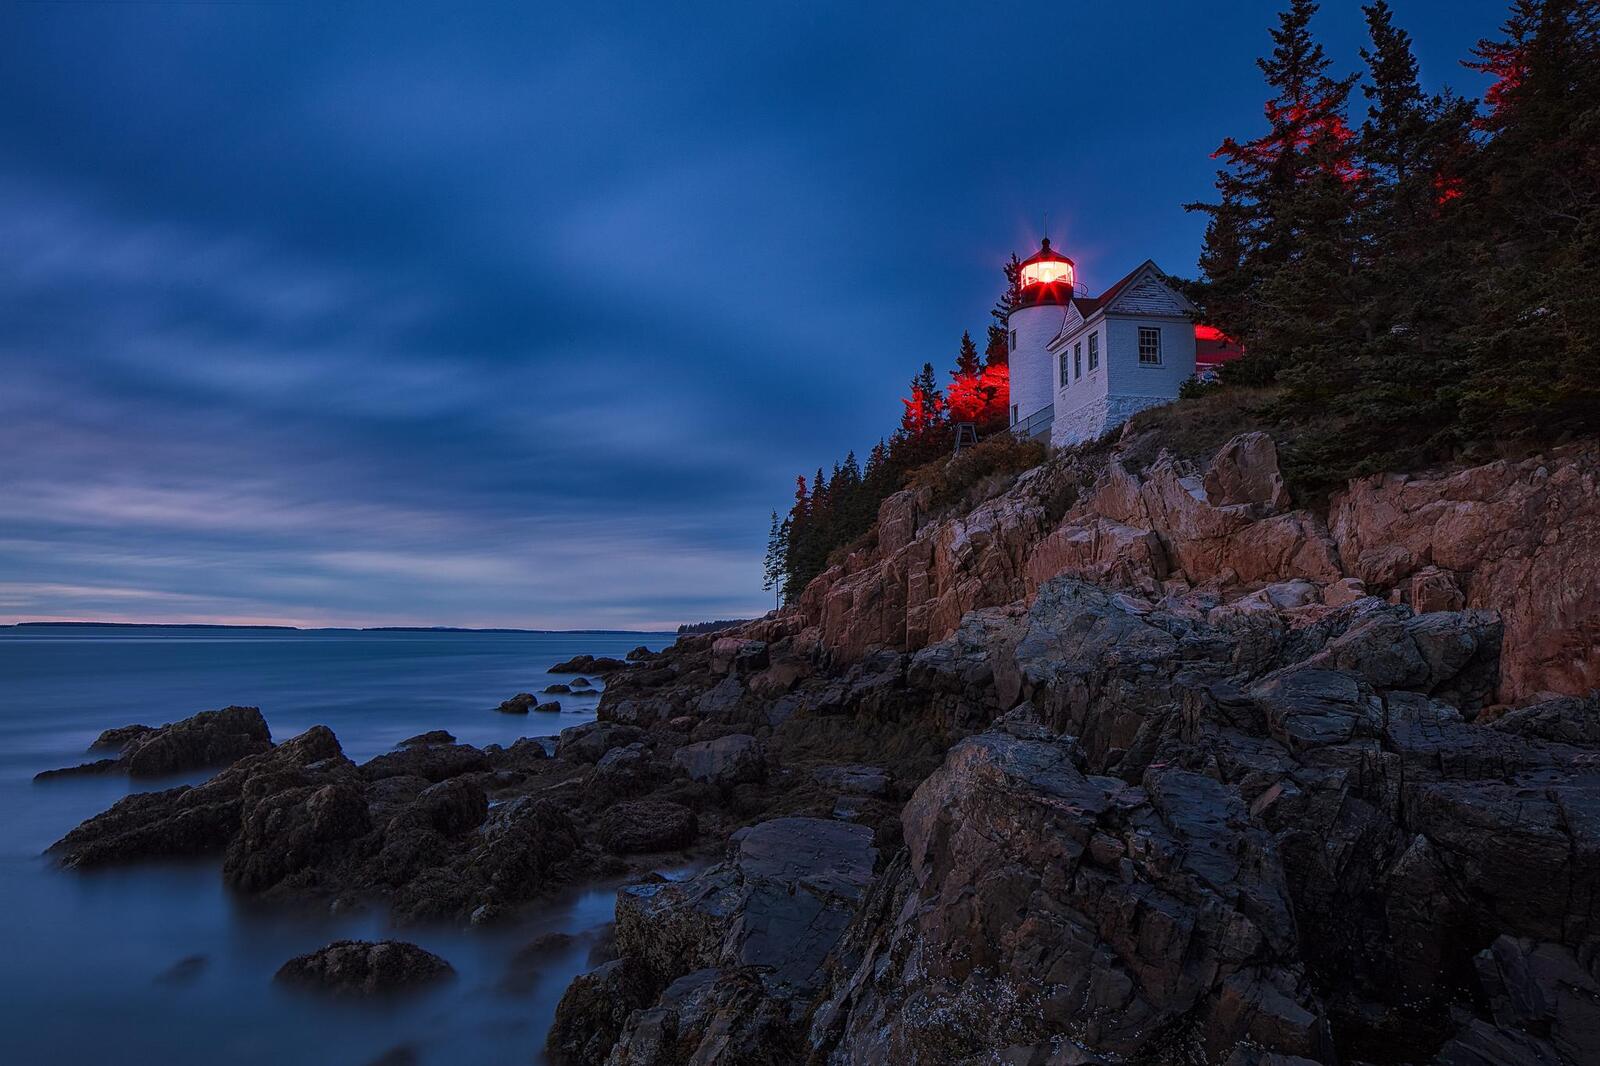 Обои Bass Harbor Lighthouse Acadia National Park Maine на рабочий стол